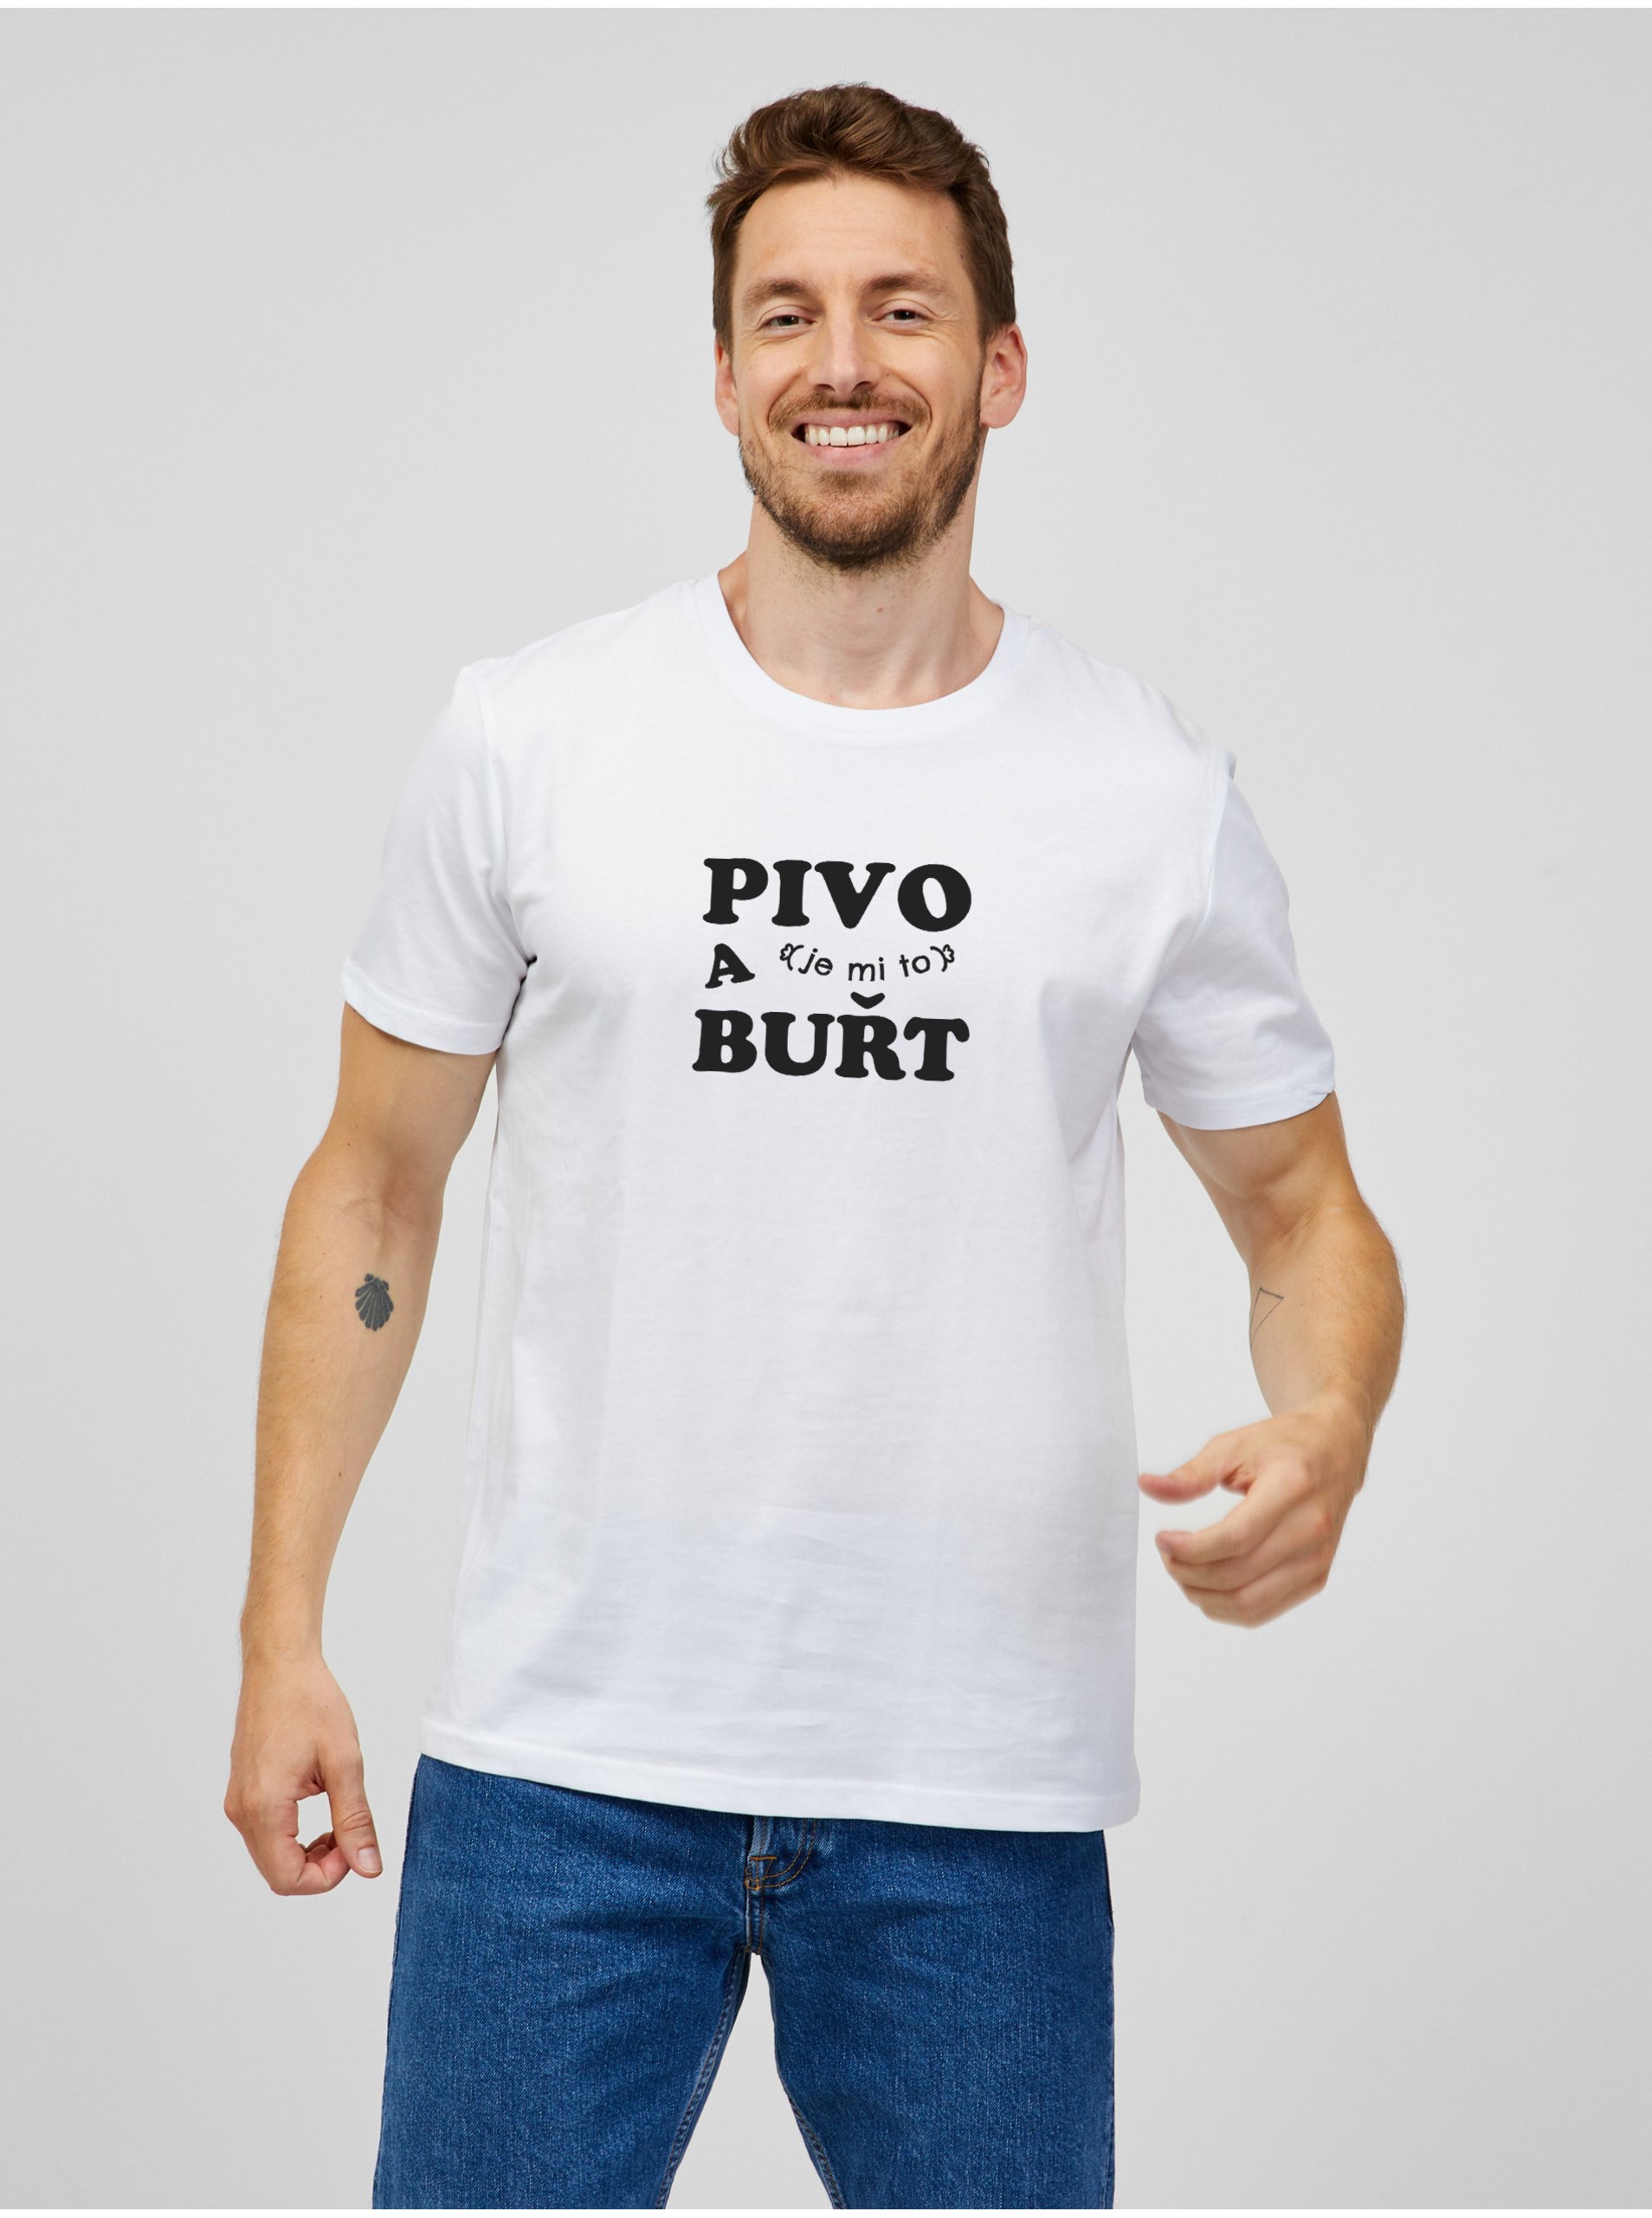 E-shop Bílé pánské tričko ZOOT.Original PIVO a (je mi to) BUŘT